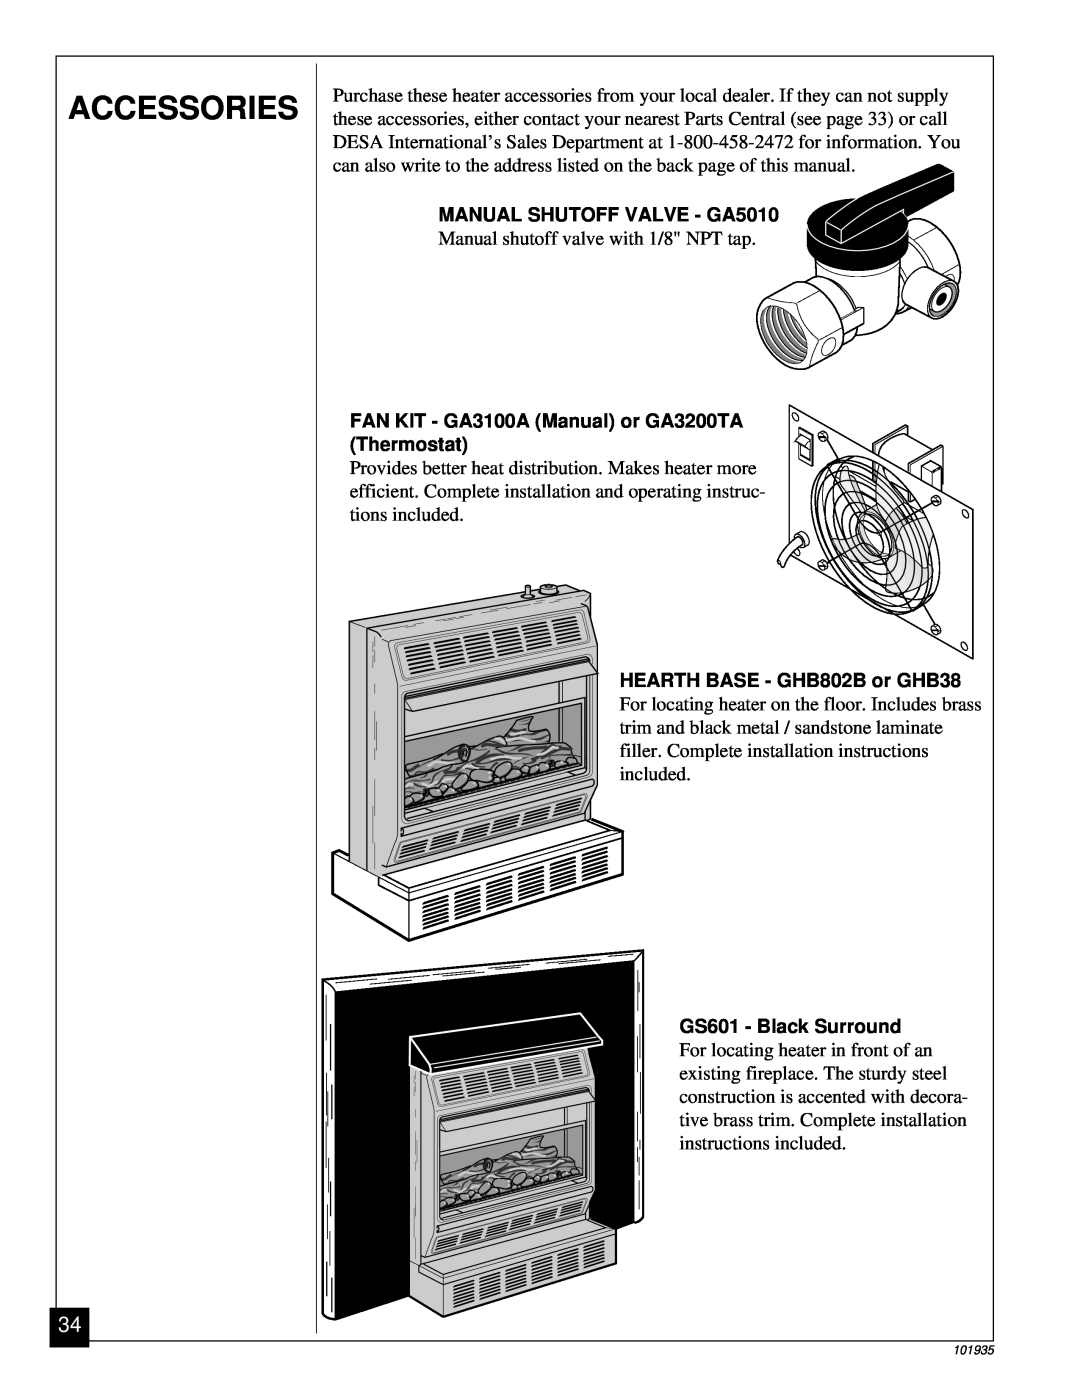 Desa RFP28TB Accessories, MANUAL SHUTOFF VALVE - GA5010, FAN KIT - GA3100A Manual or GA3200TA Thermostat 